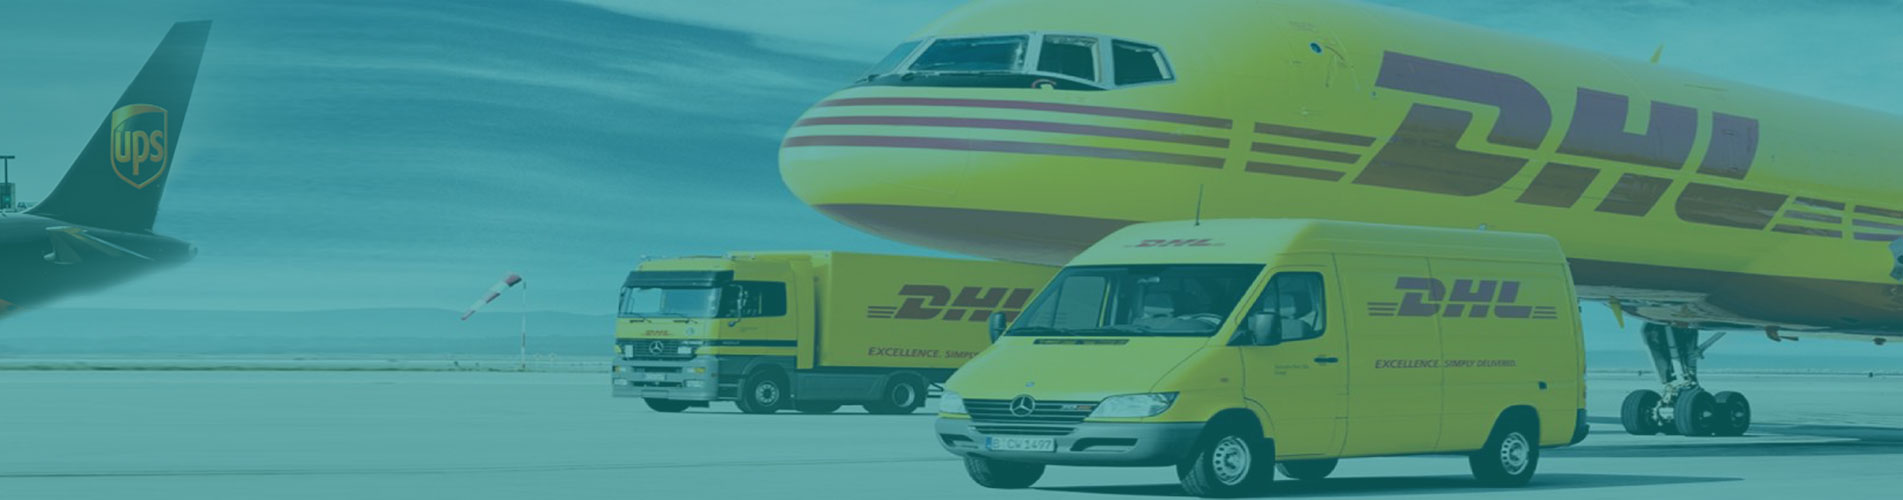 Global International Express DHL Service - Yunexpress